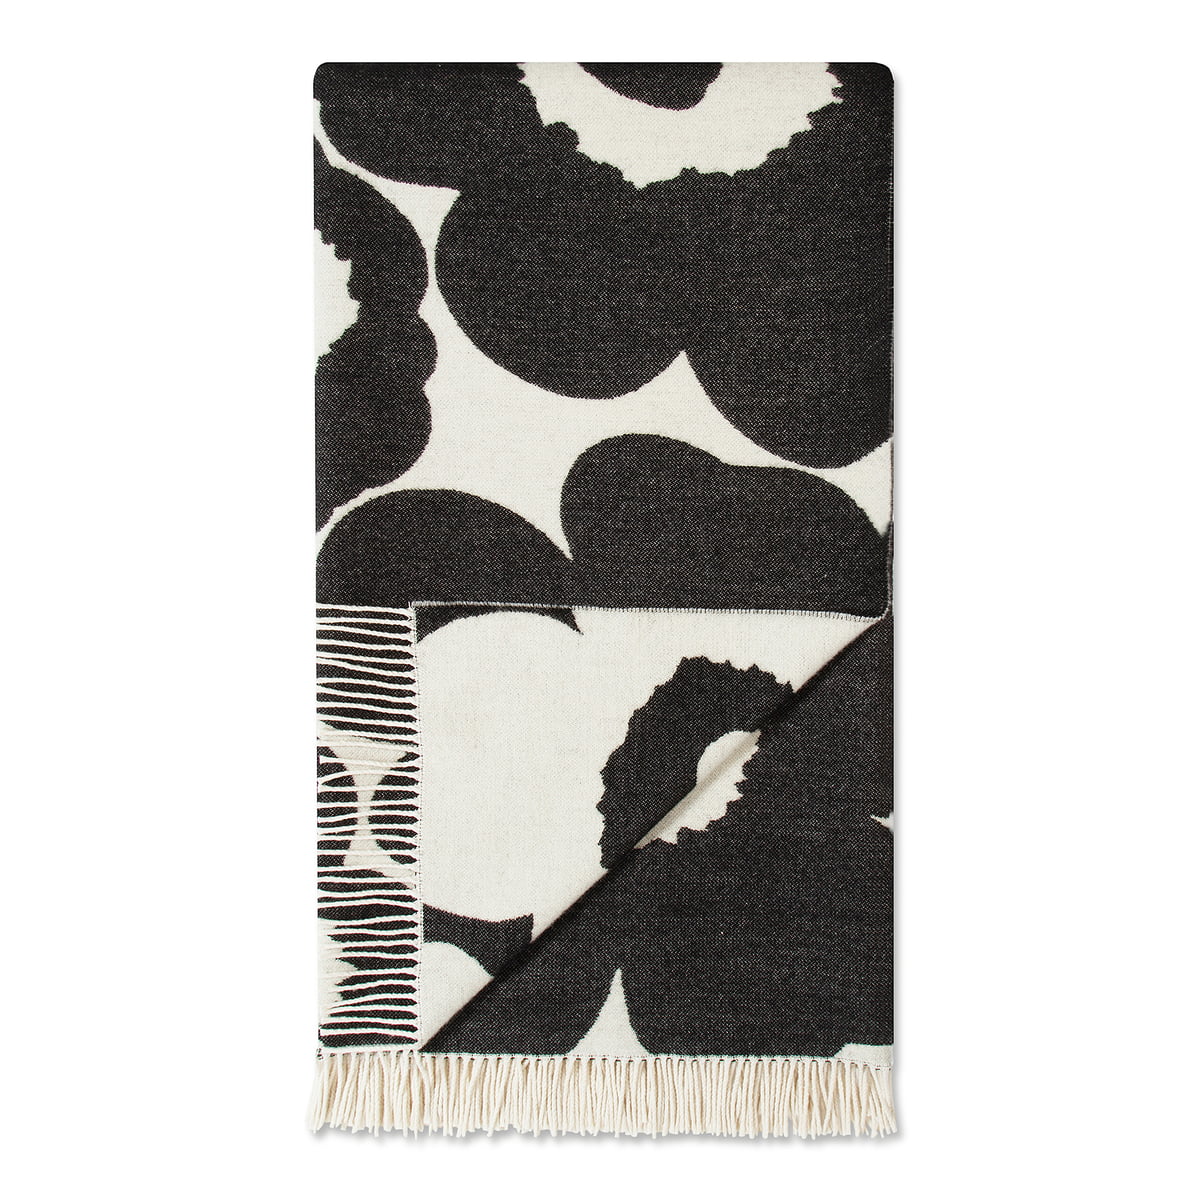 Buy the Unikko Blanket by Marimekko